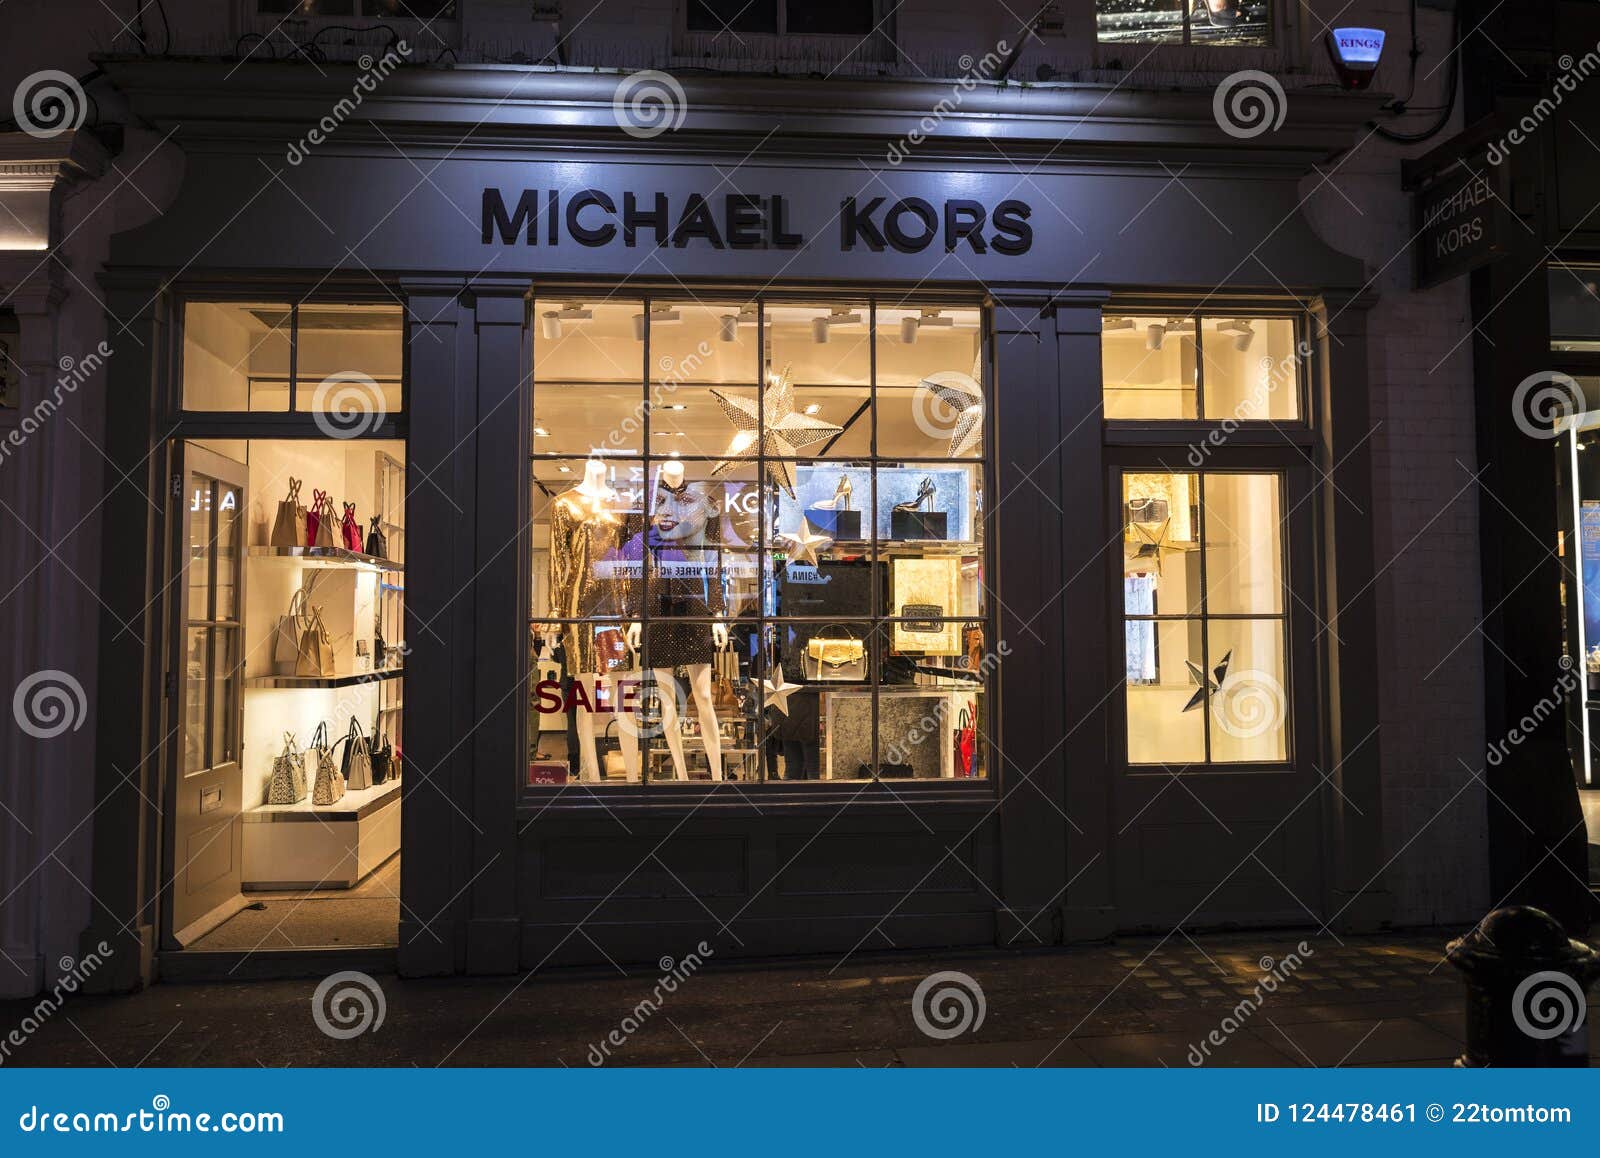 michael kors shop london